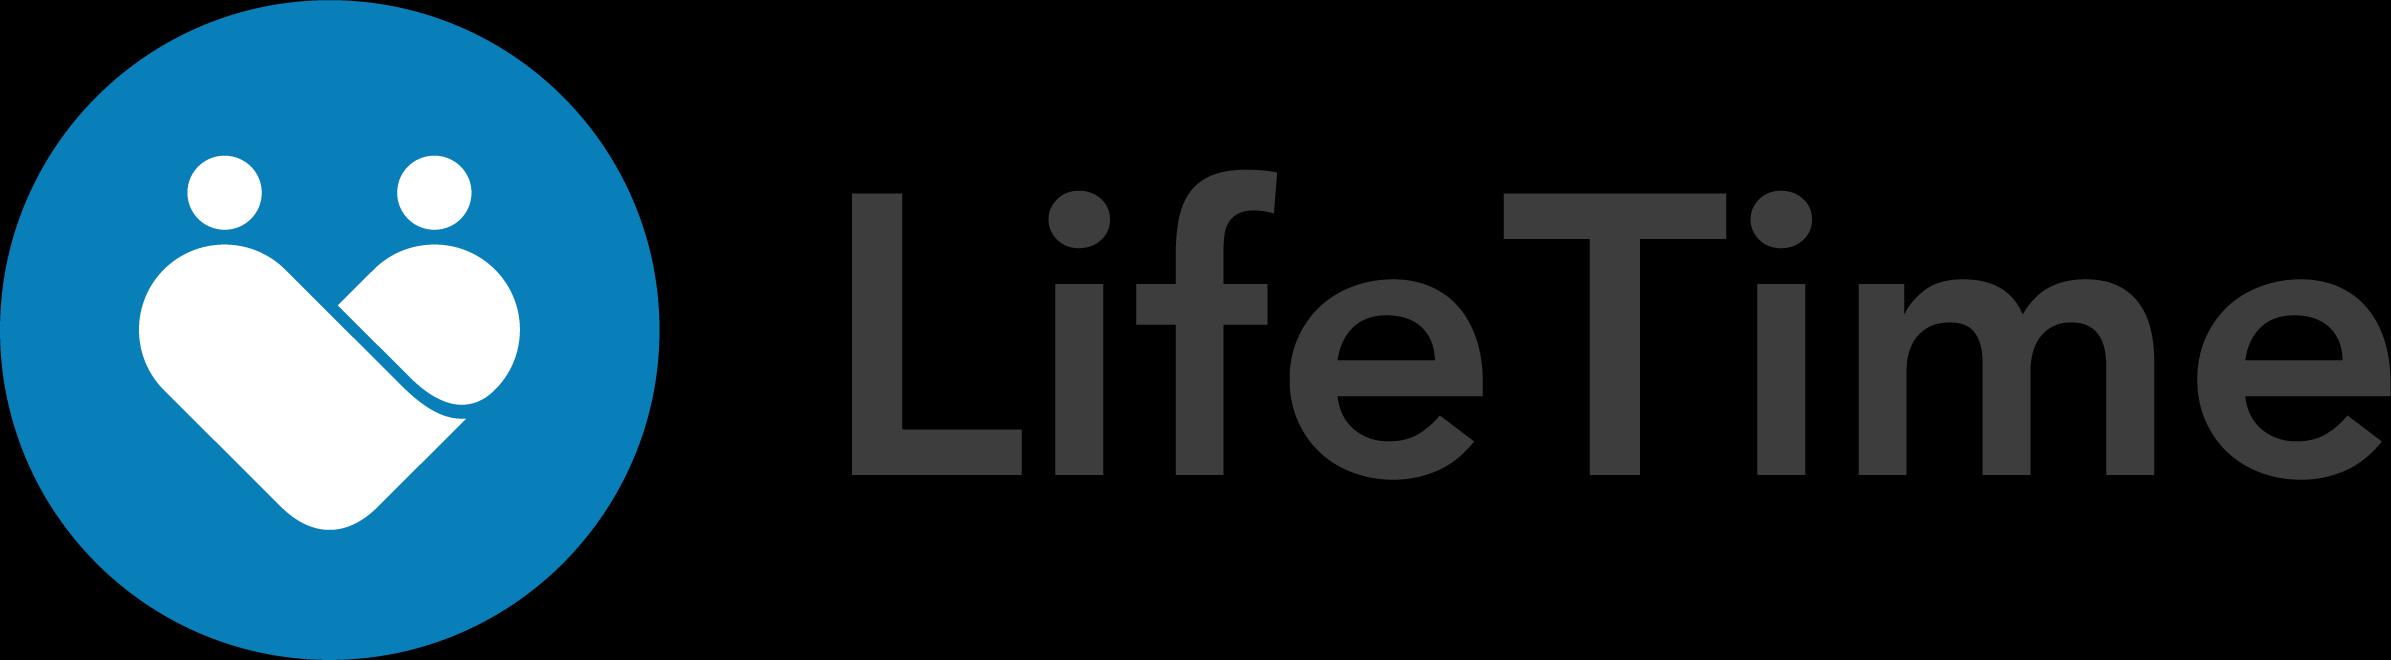 LifeTime_logo